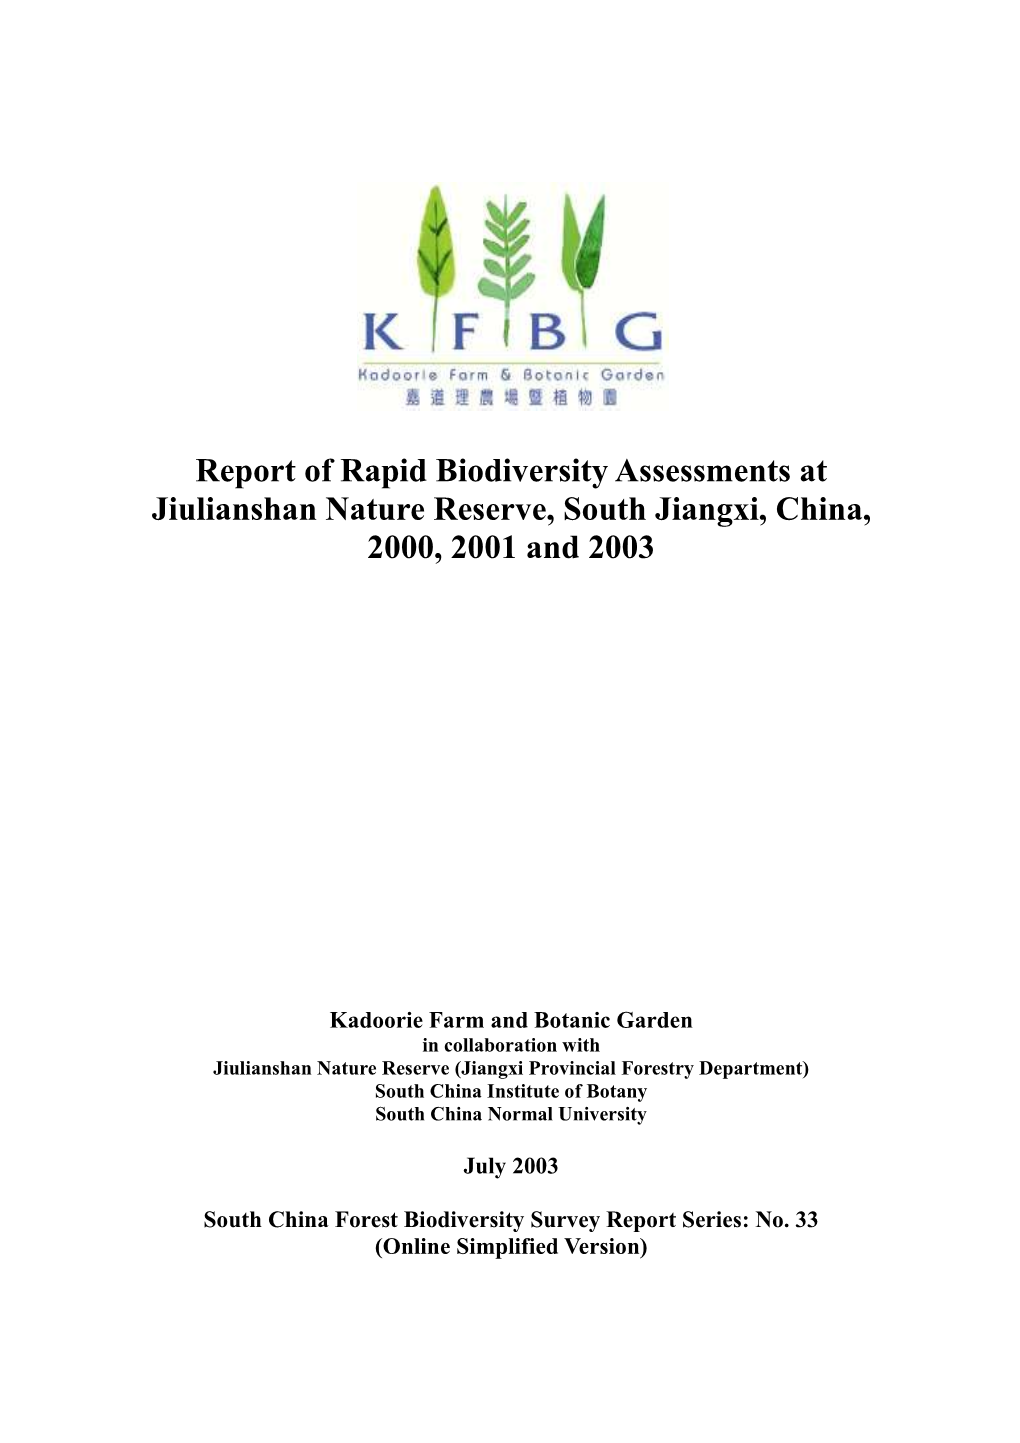 Report of Rapid Biodiversity Assessments at Jiulianshan Nature Reserve, South Jiangxi, China, 2000, 2001 and 2003